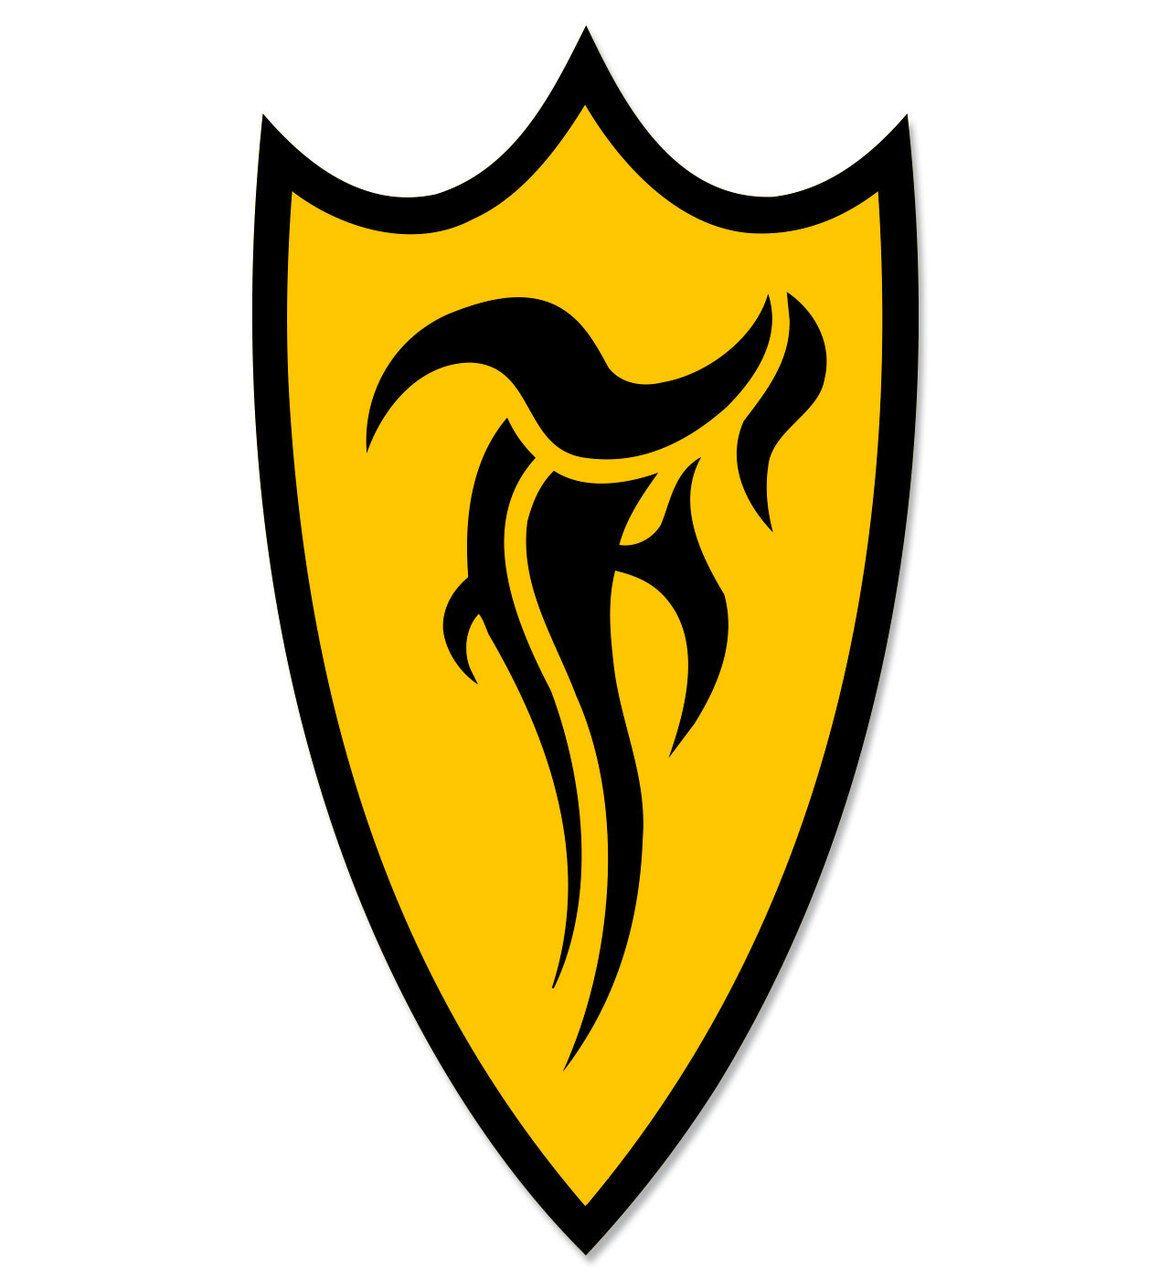 Black and Yellow Shield Logo - F Shield Sticker (Black Yellow)